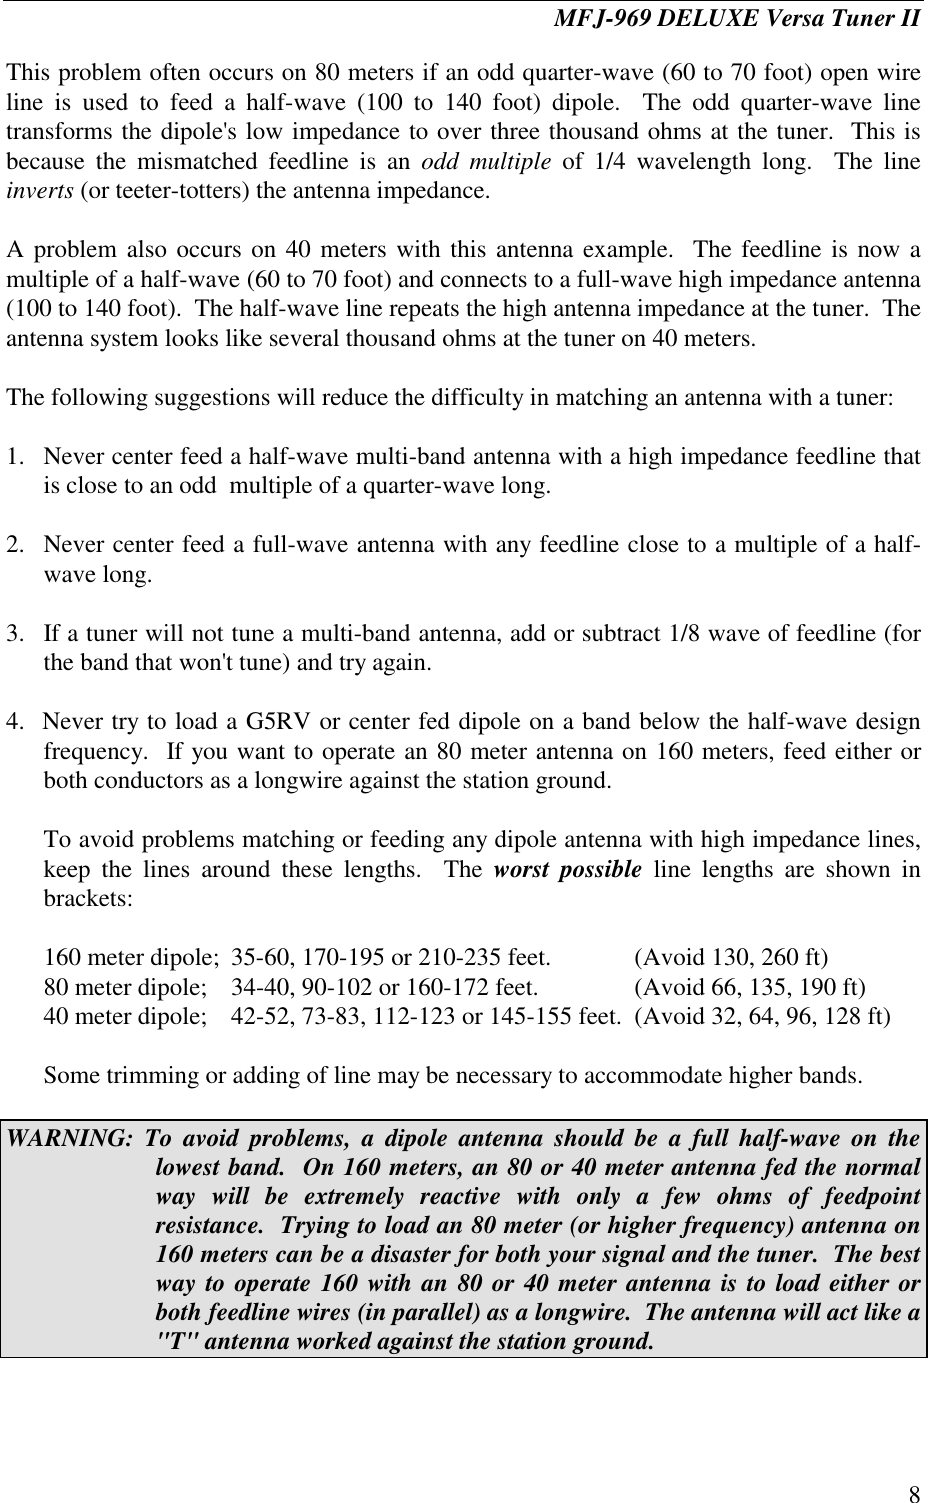 Page 8 of 10 - MFJ-969 Deluxe Versa Tuner II MFJ--969--Antenna Tuner-Manual